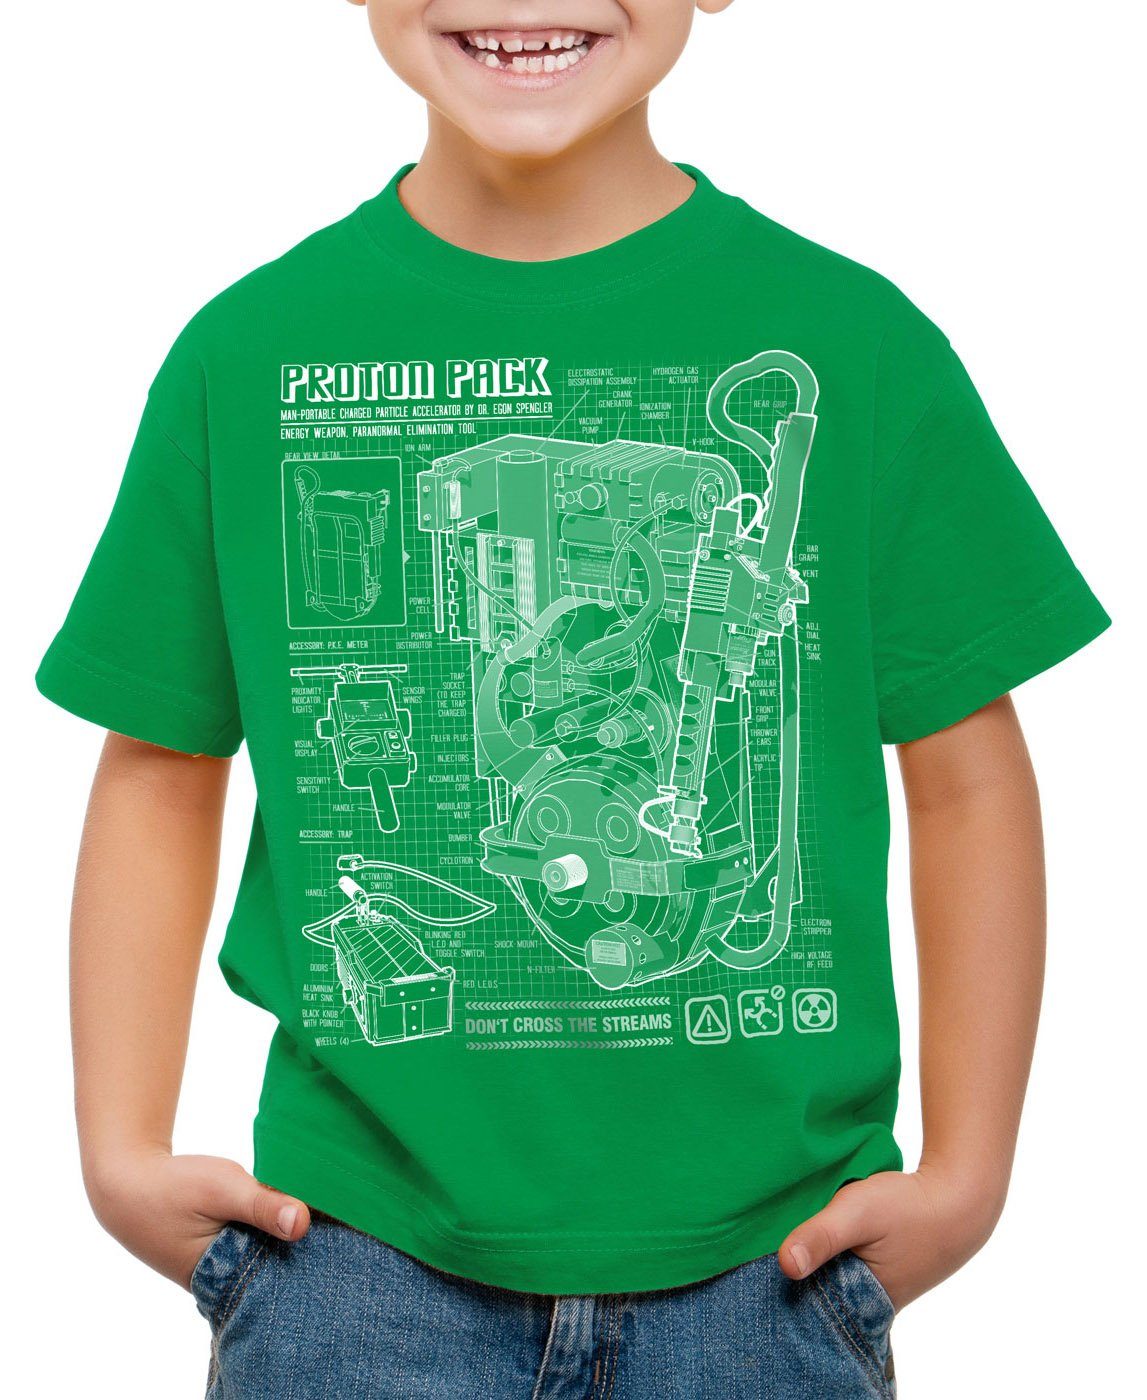 Kinder pack Protonenstrahler Geisterjäger T-Shirt style3 Blaupause proton grün Print-Shirt